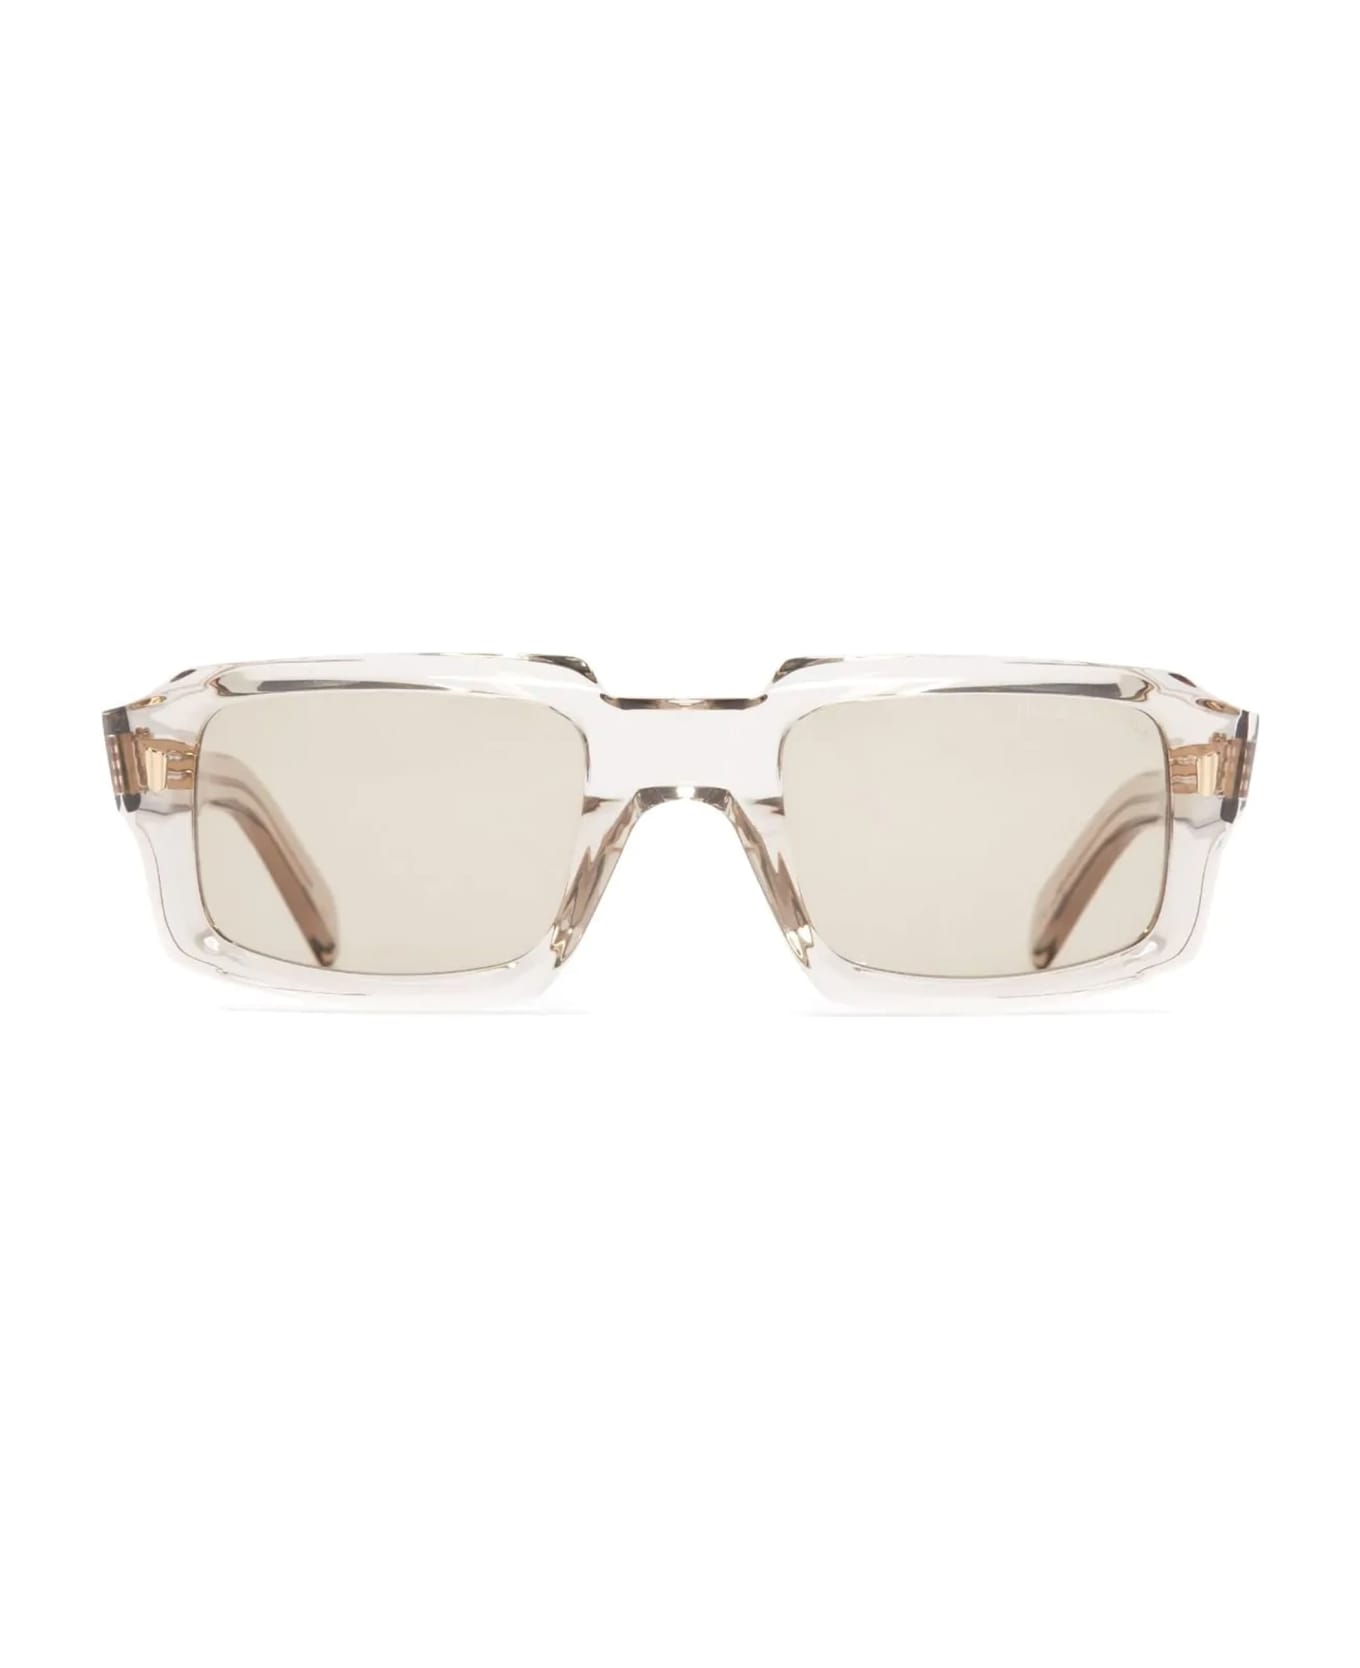 Cutler and Gross 9495 / Sand Crystal Sunglasses - transparent beige サングラス